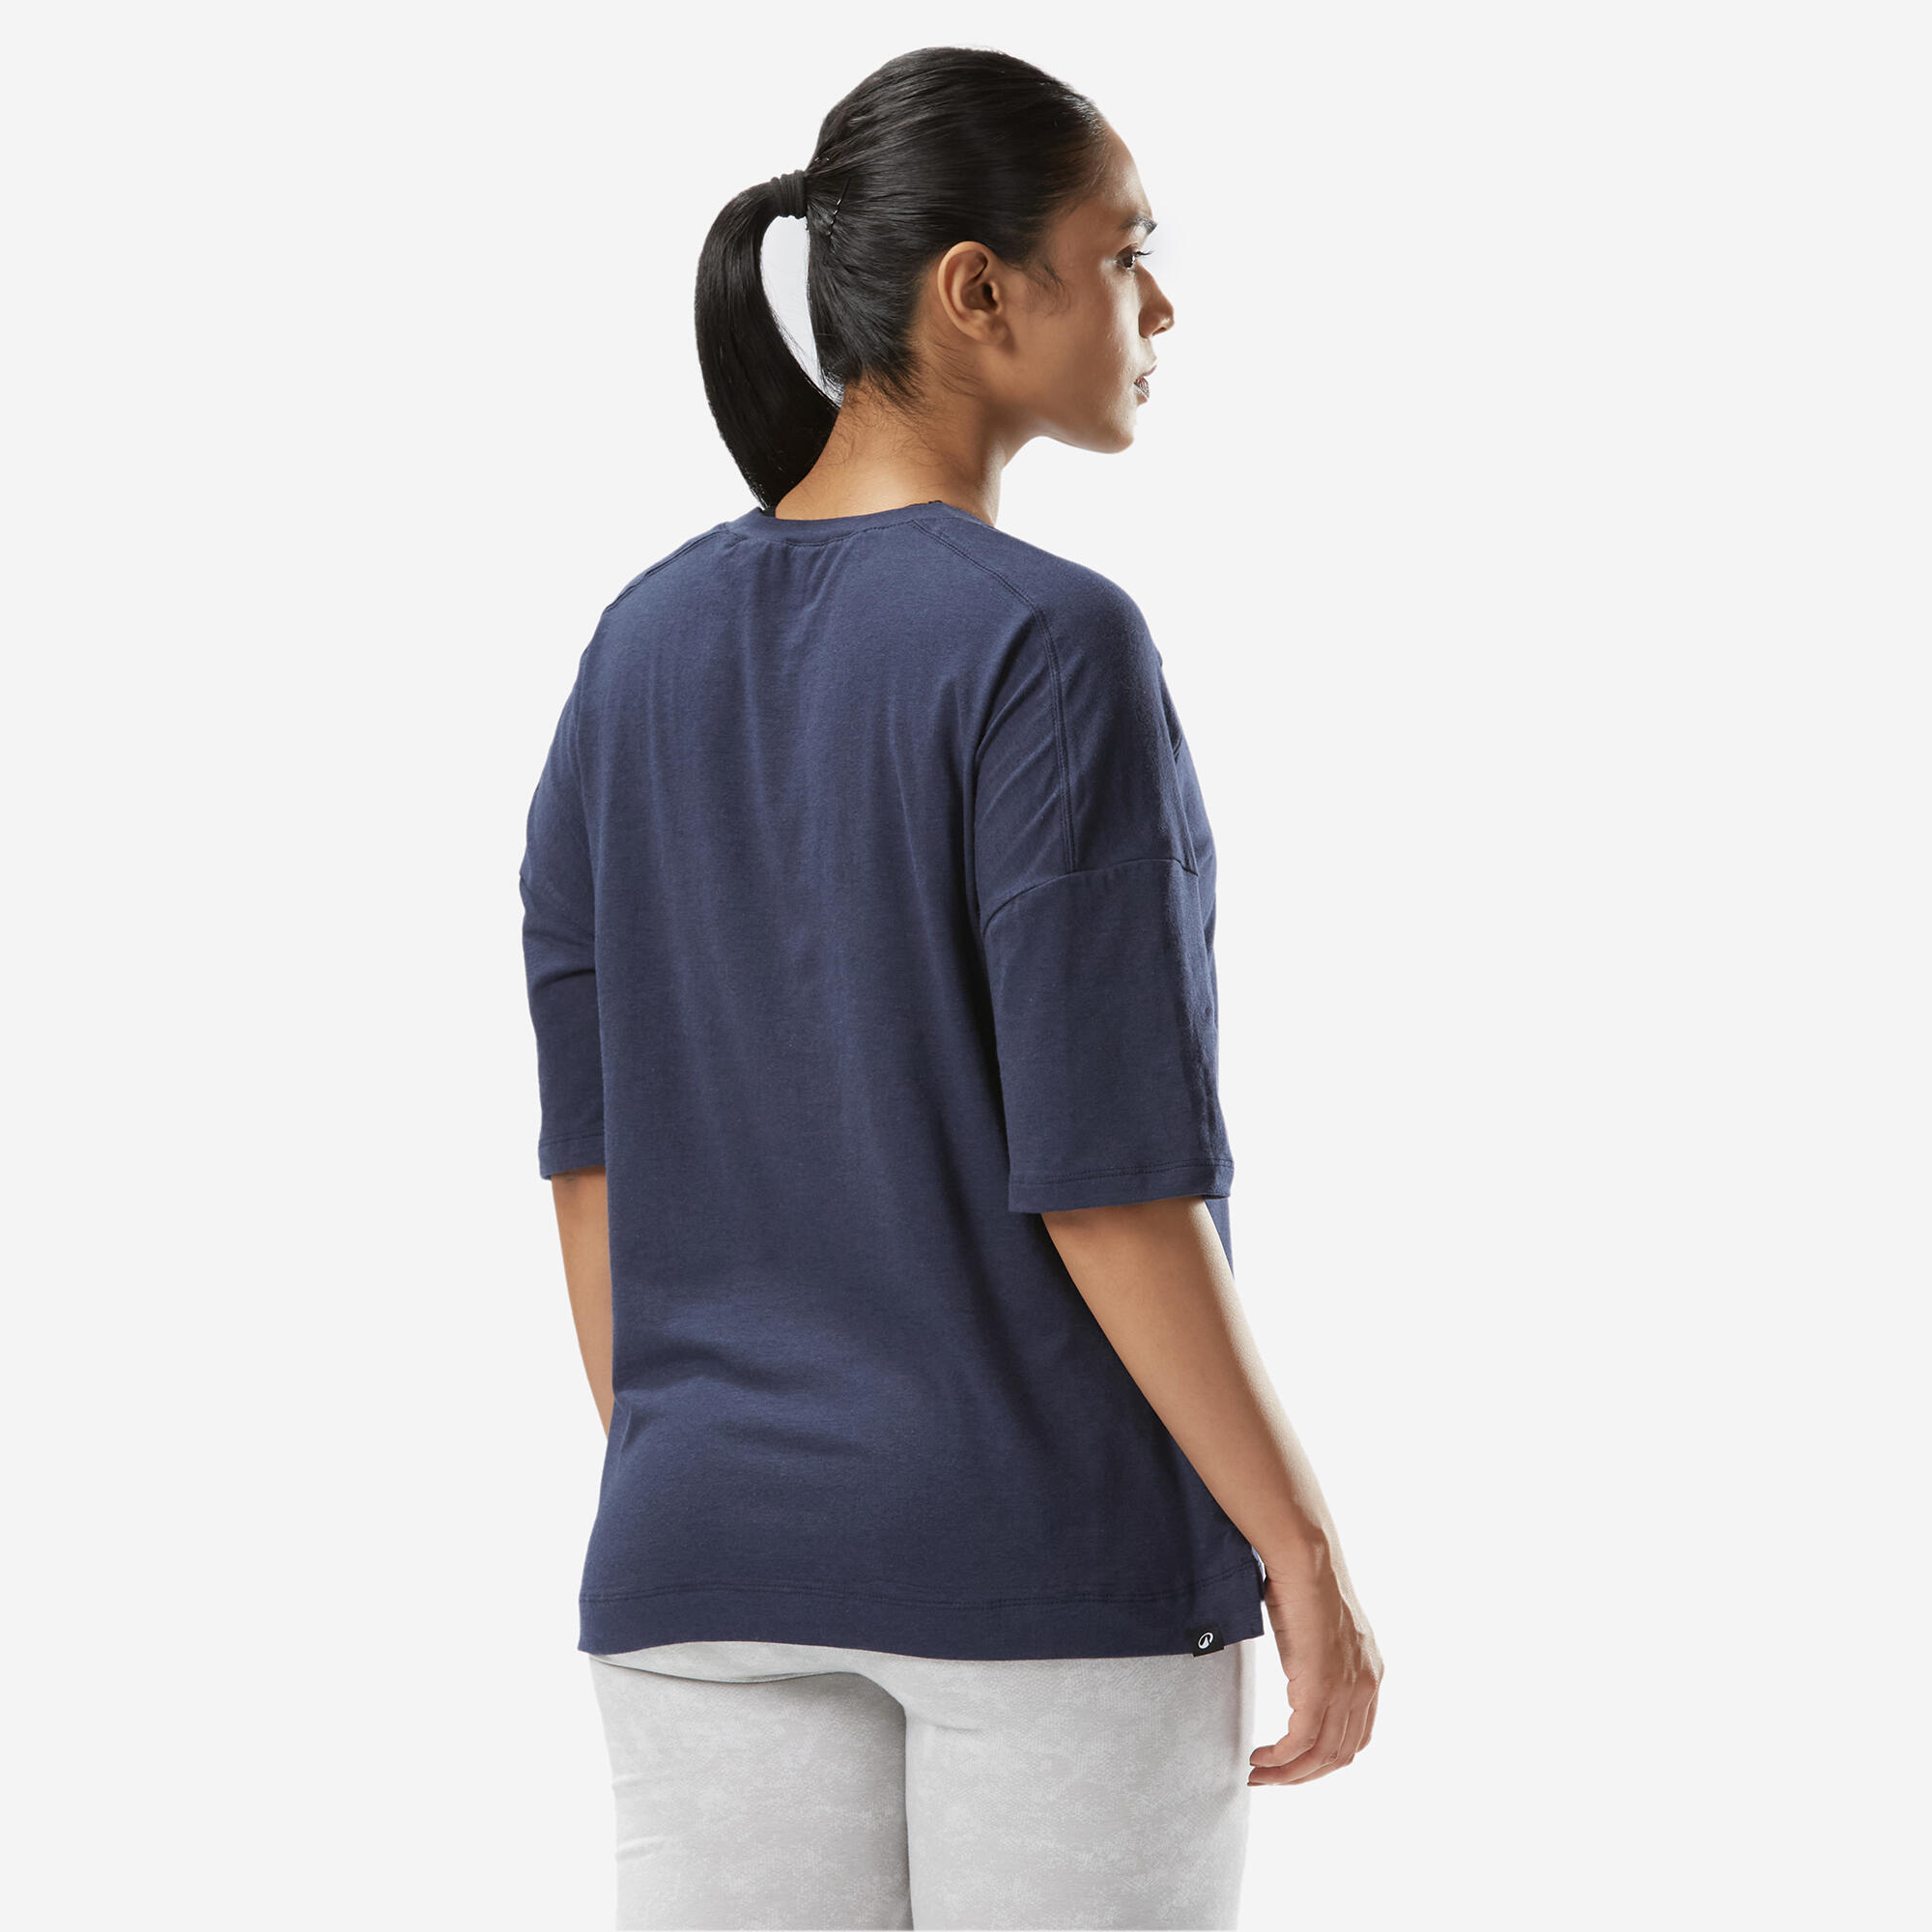 Women's Loose-Fit Fitness T-Shirt 520 - Navy Blue Print 2/6